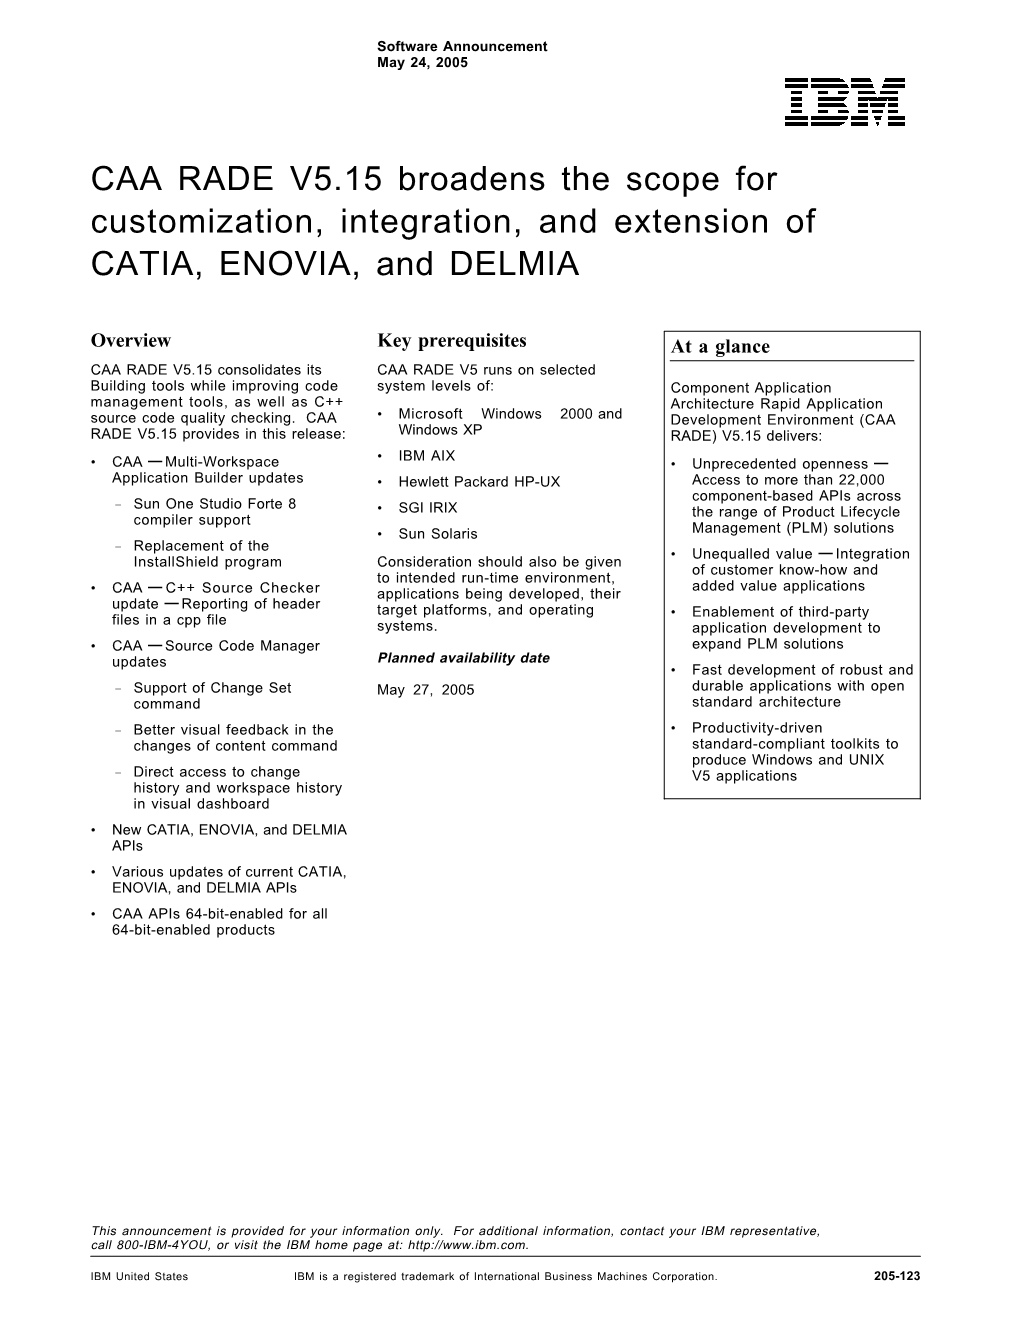 CAA RADE V5.15 Broadens the Scope for Customization, Integration, and Extension of CATIA, ENOVIA, and DELMIA